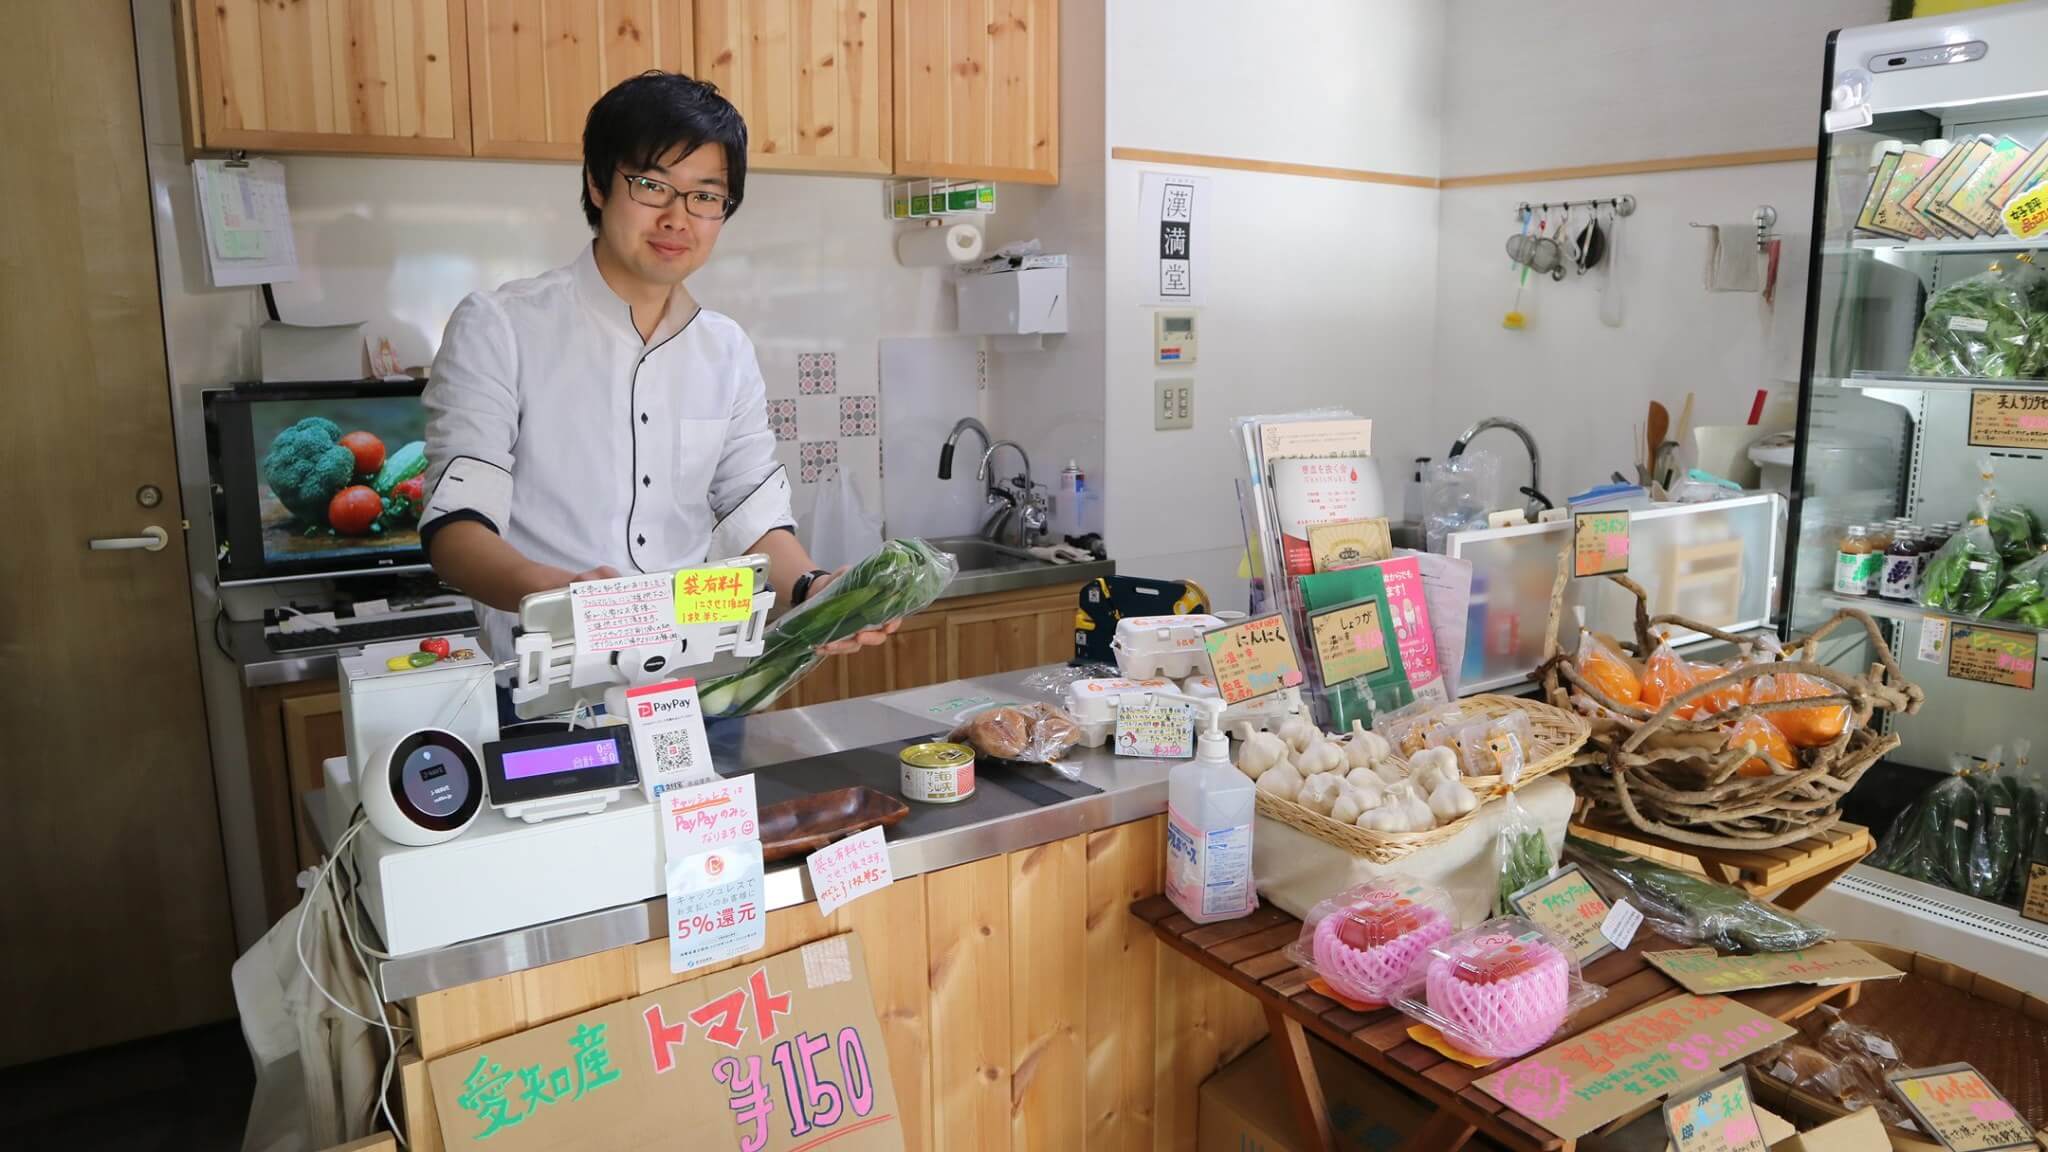 【INTERVIEW】青木満さんに伺う、漢方・鍼灸・食養生の魅力 - ホリスティックライフマガジン